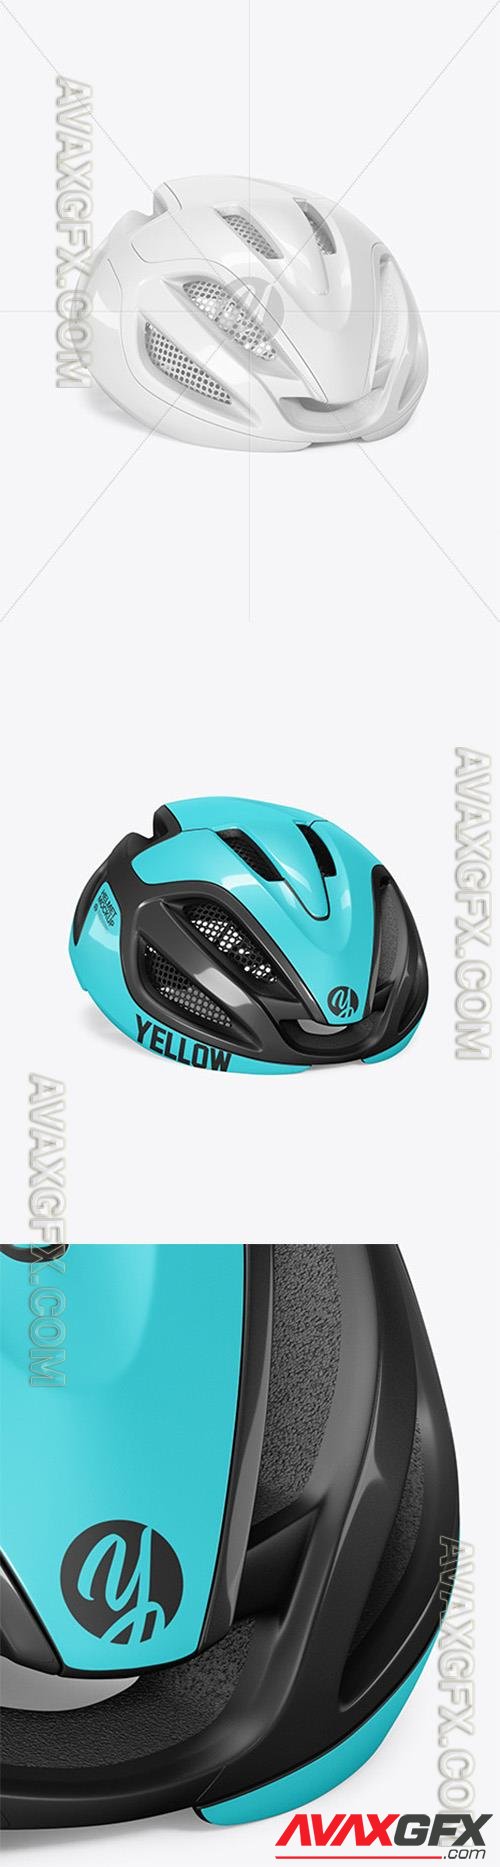 Cycling Helmet Mockup 75961